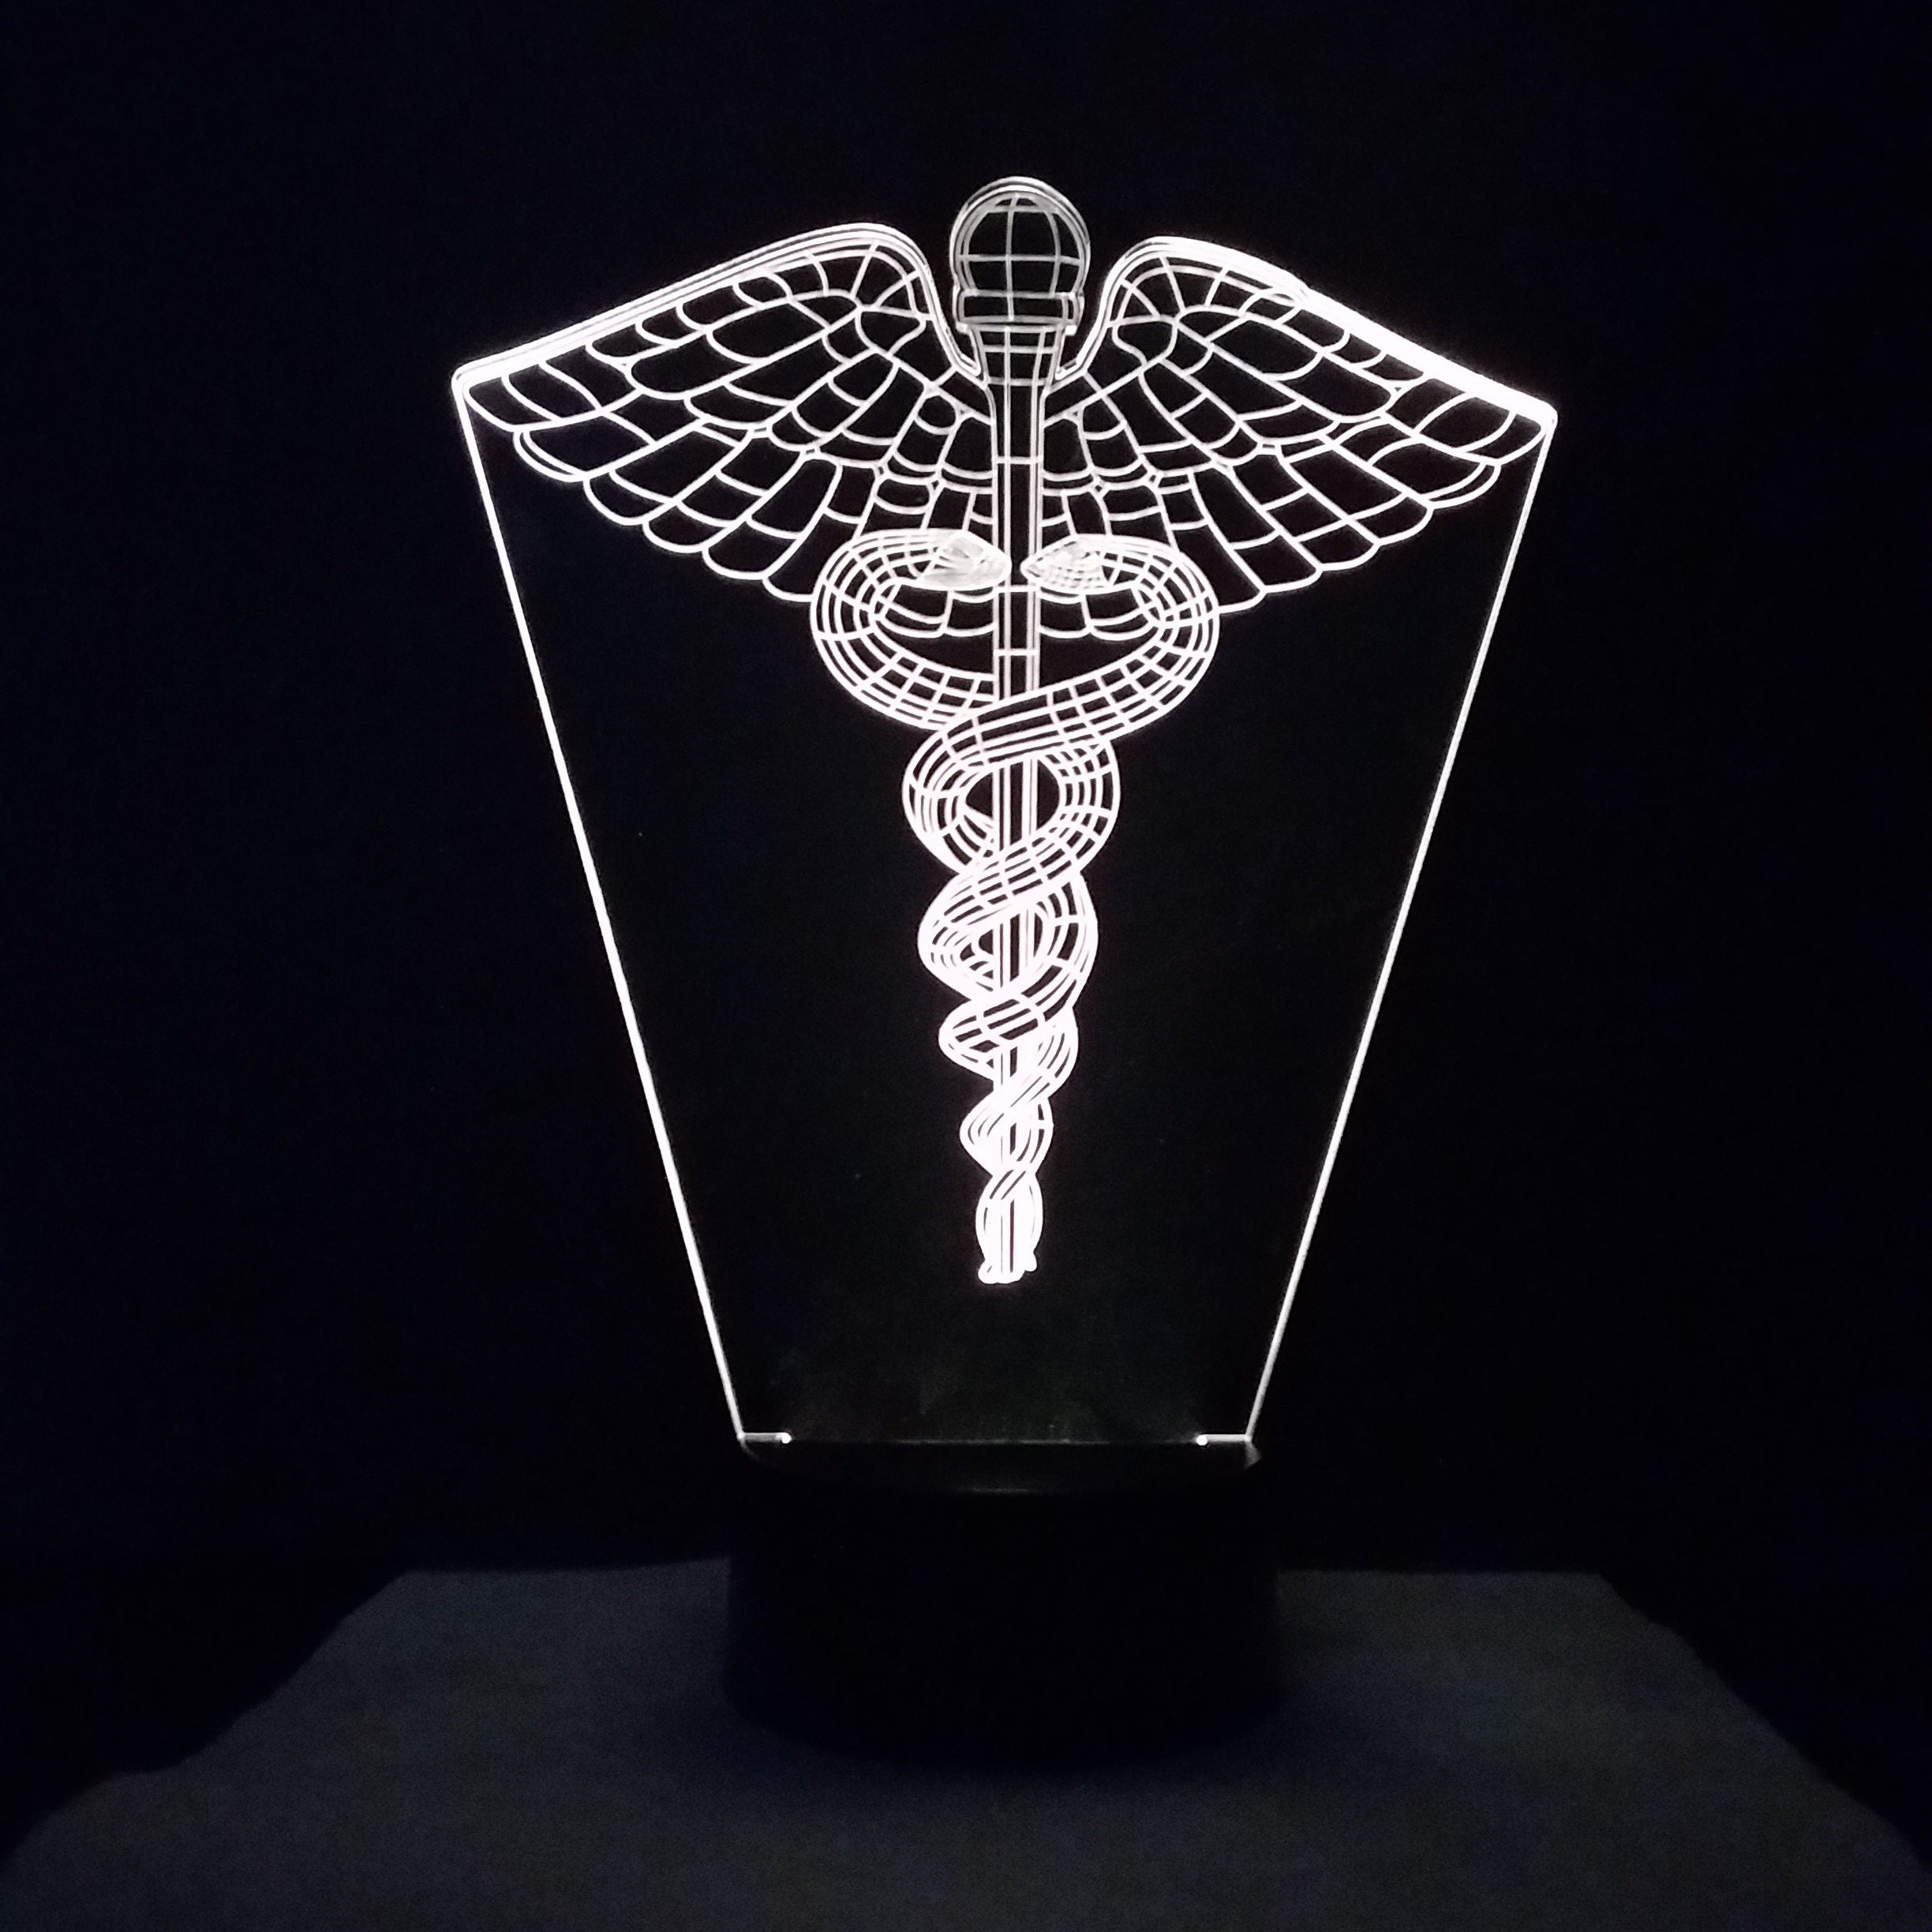 Awesome "Medical Symbol" 3D LED Lamp (21158) - FREE SHIPPING!